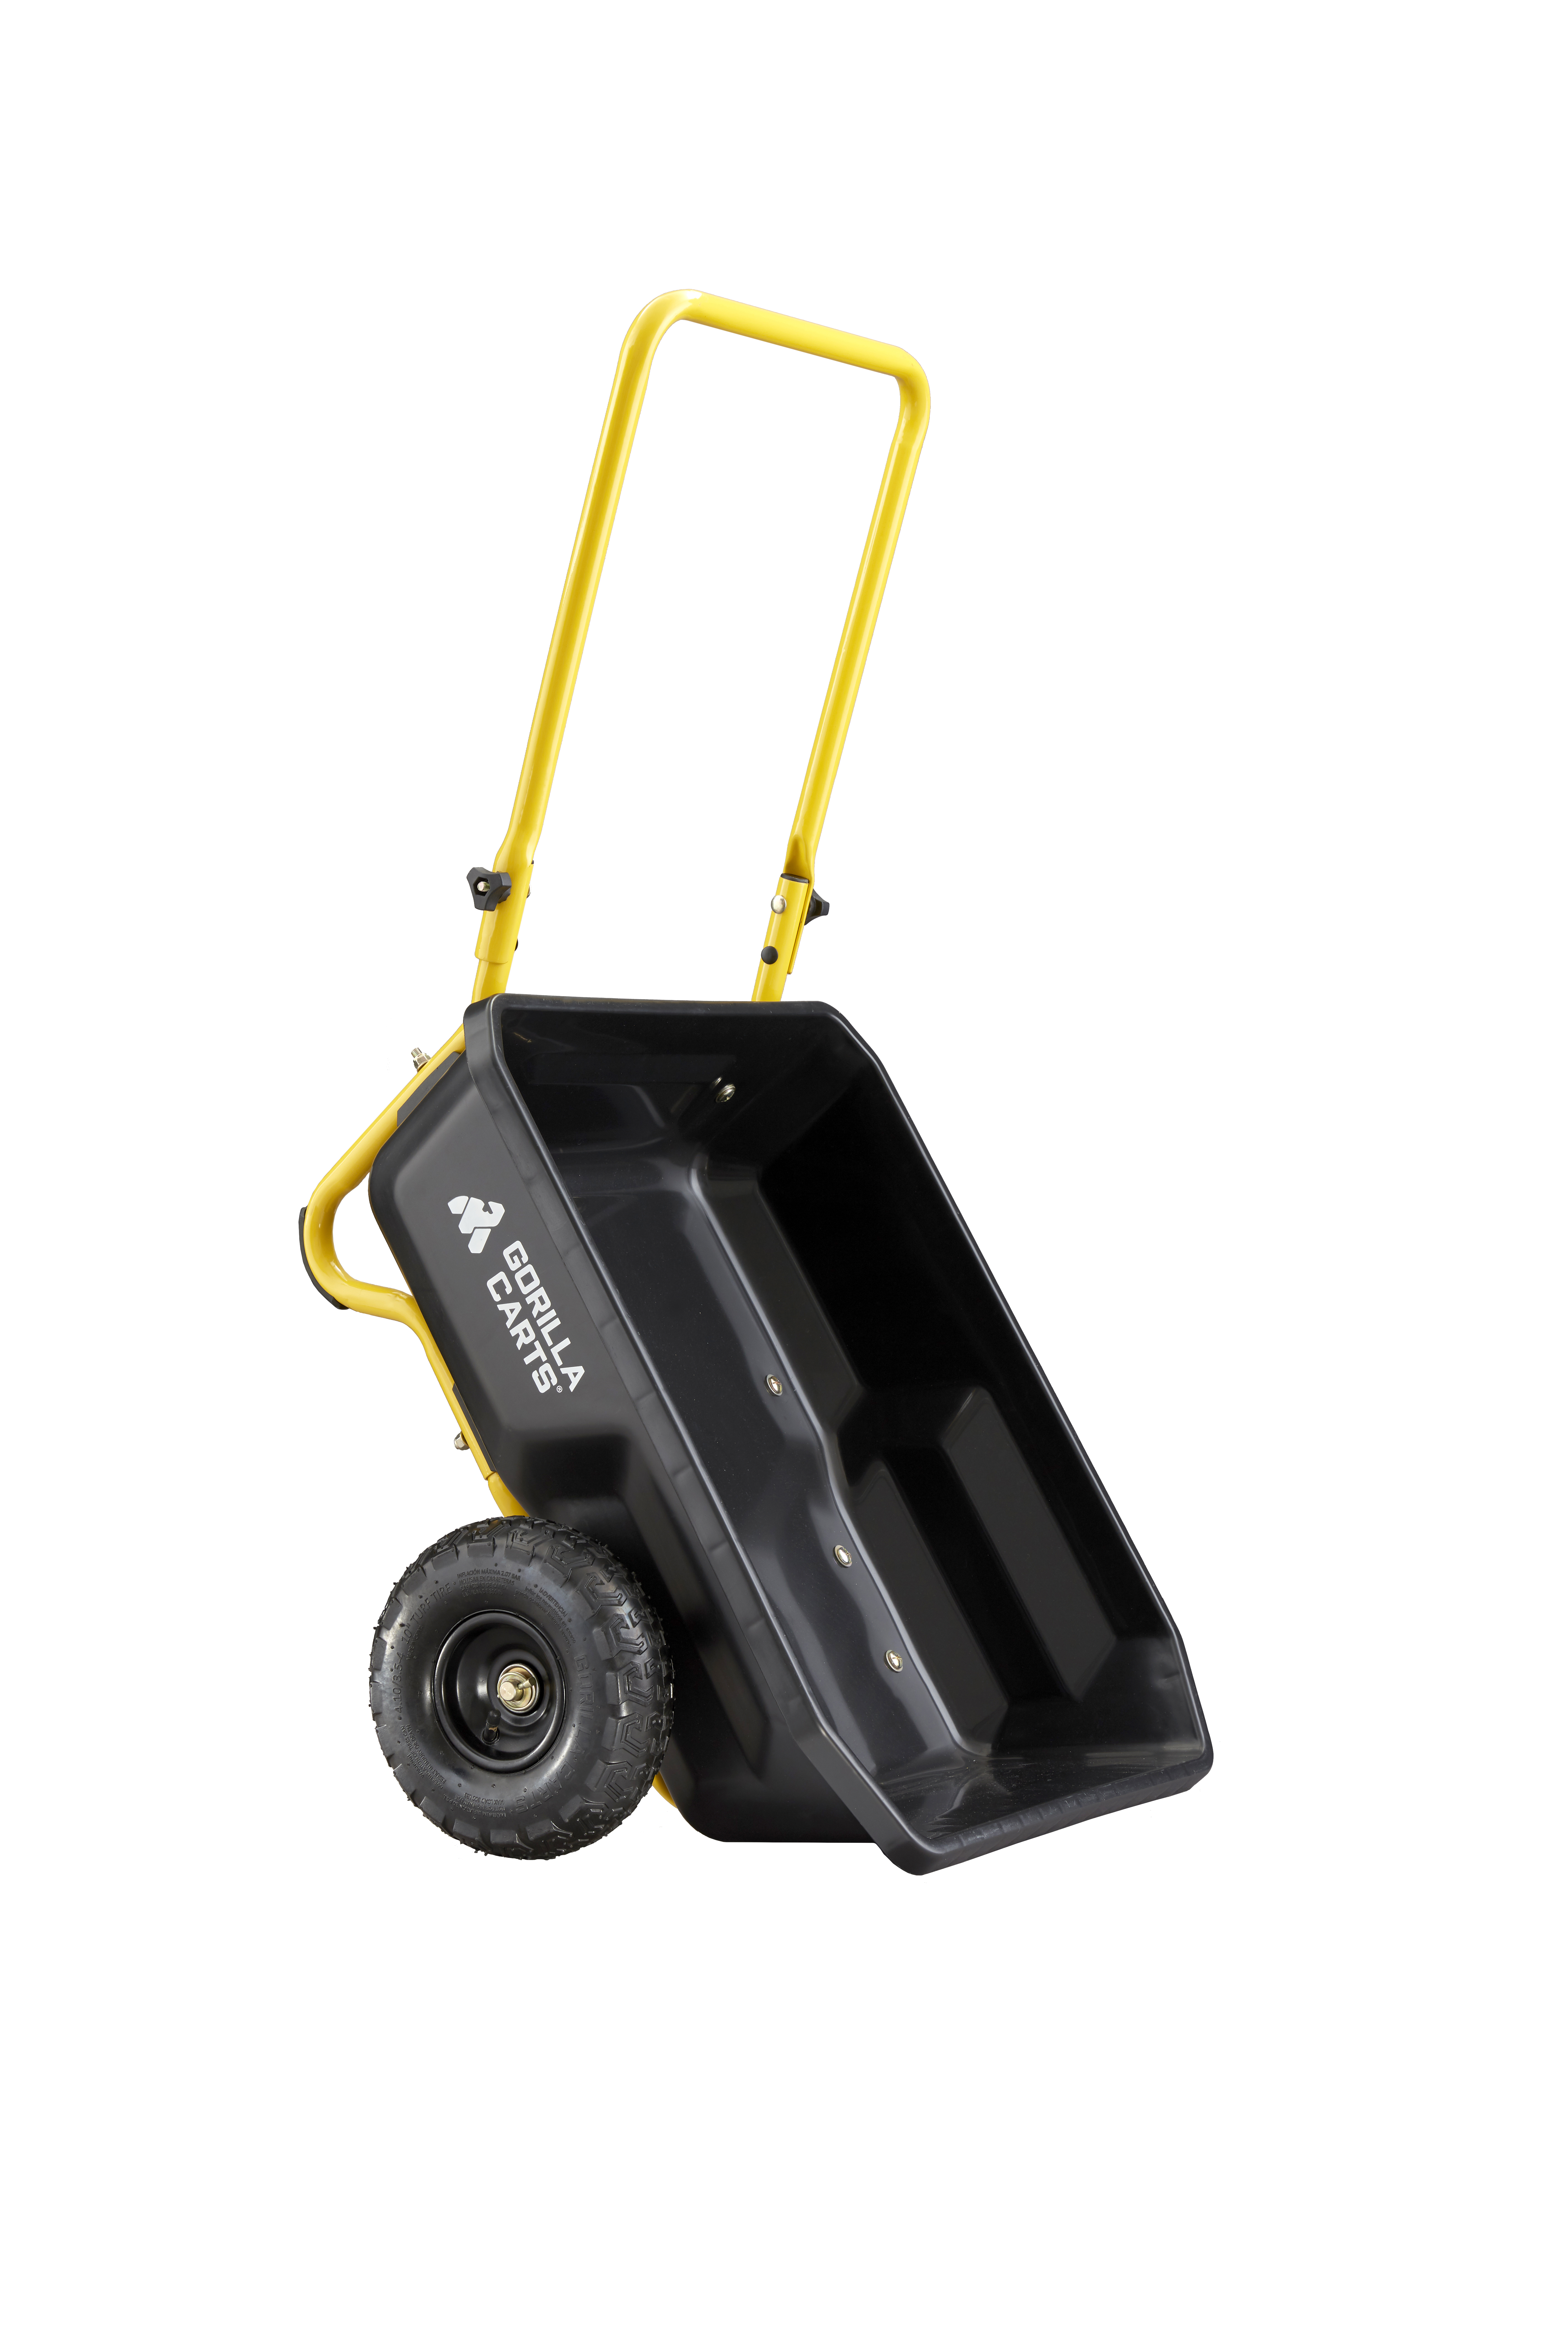 Gorilla Carts GCR-4 4 cu. ft. Poly Yard Cart, 300-Pound Capacity, Black - image 4 of 12